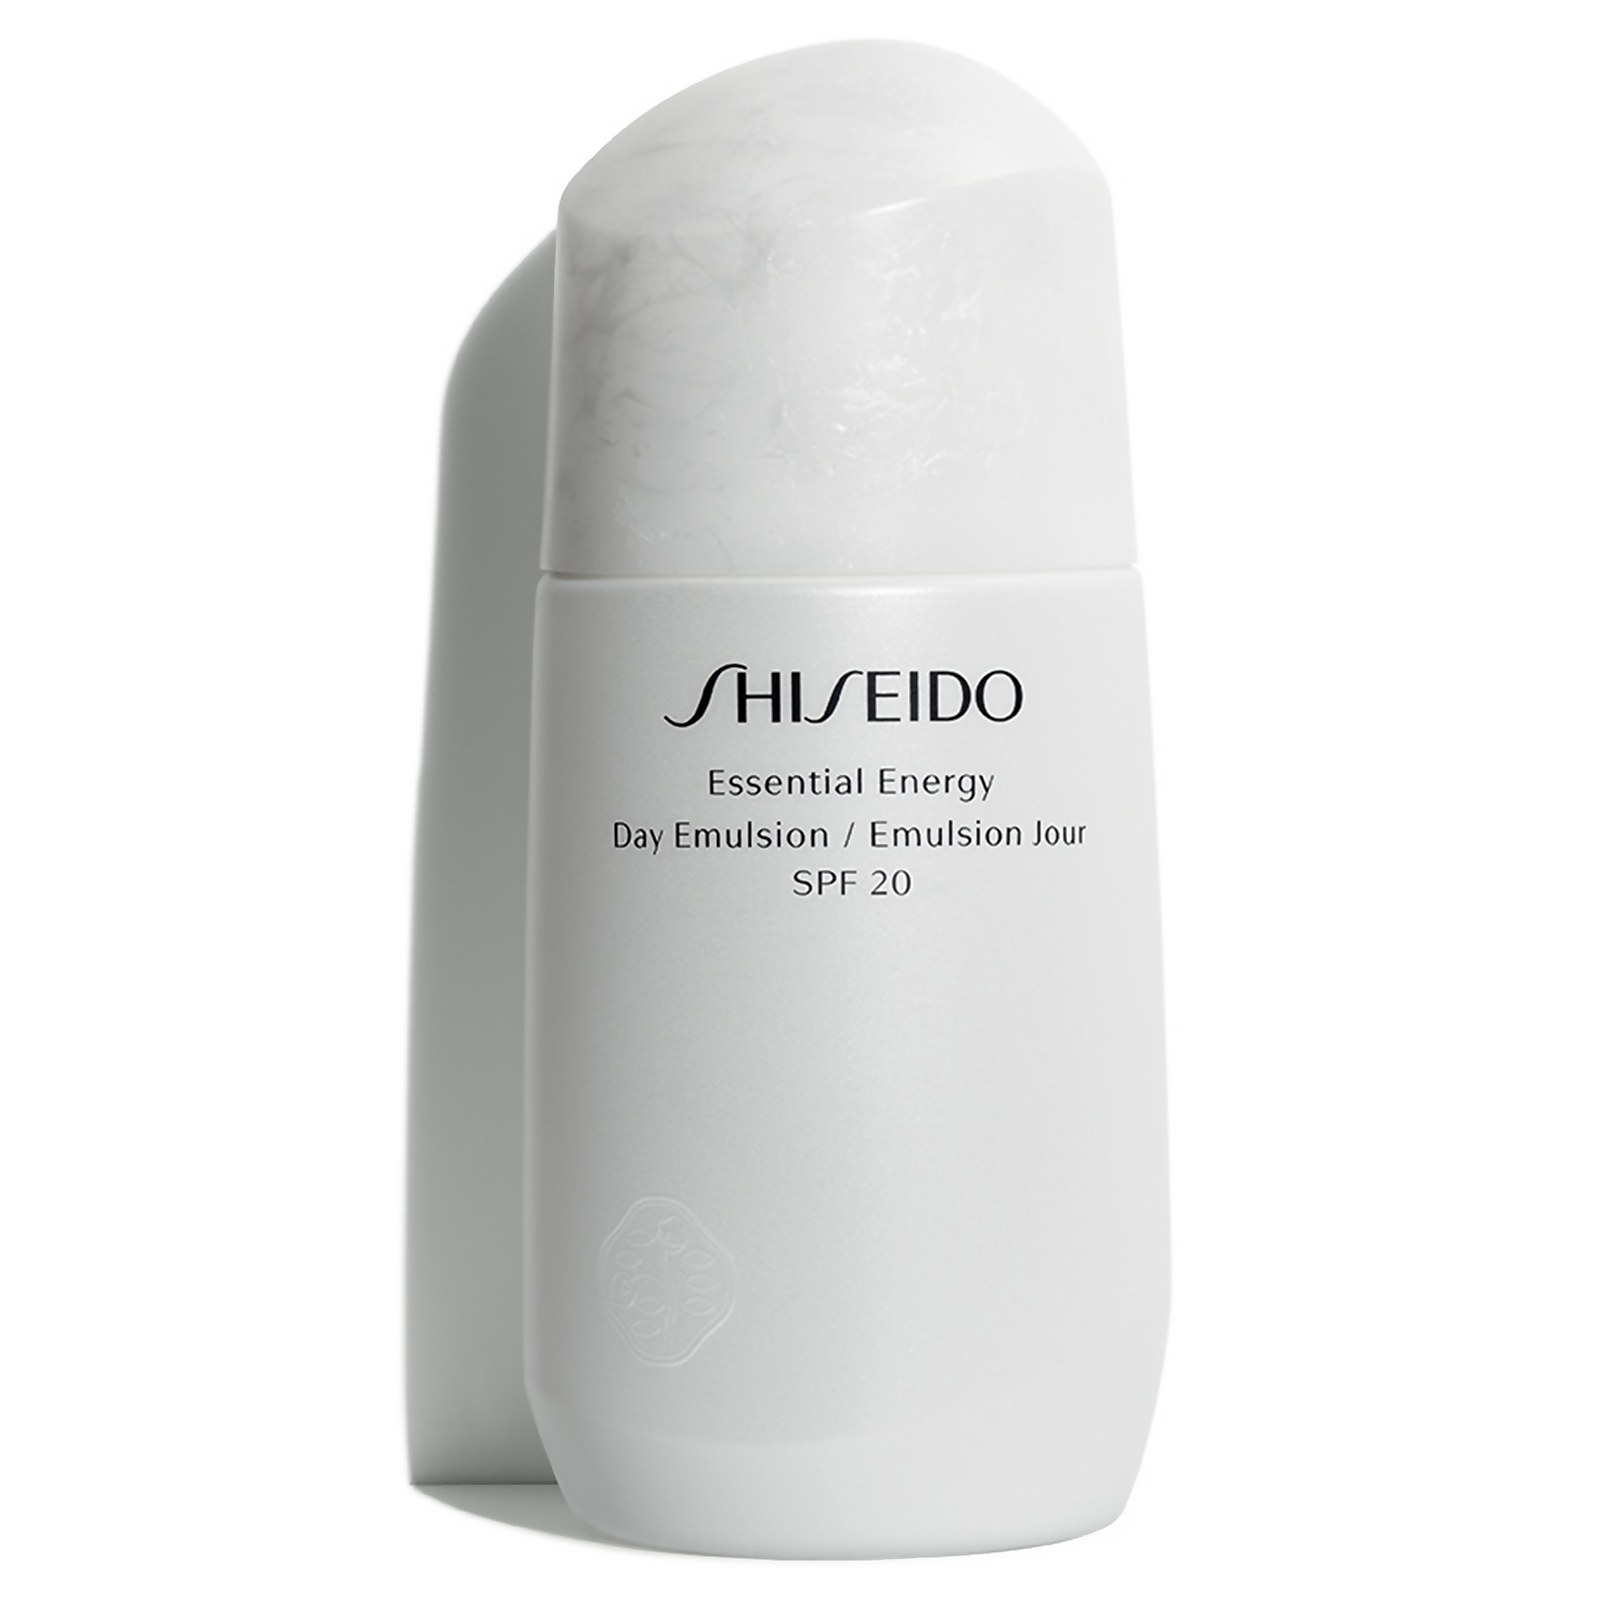 Shiseido energy. Шисейдо Ессентиал Энерджи. Shiseido SPF 20. Шисейдо крем для лица Energy. Shiseido Day Emulsion.